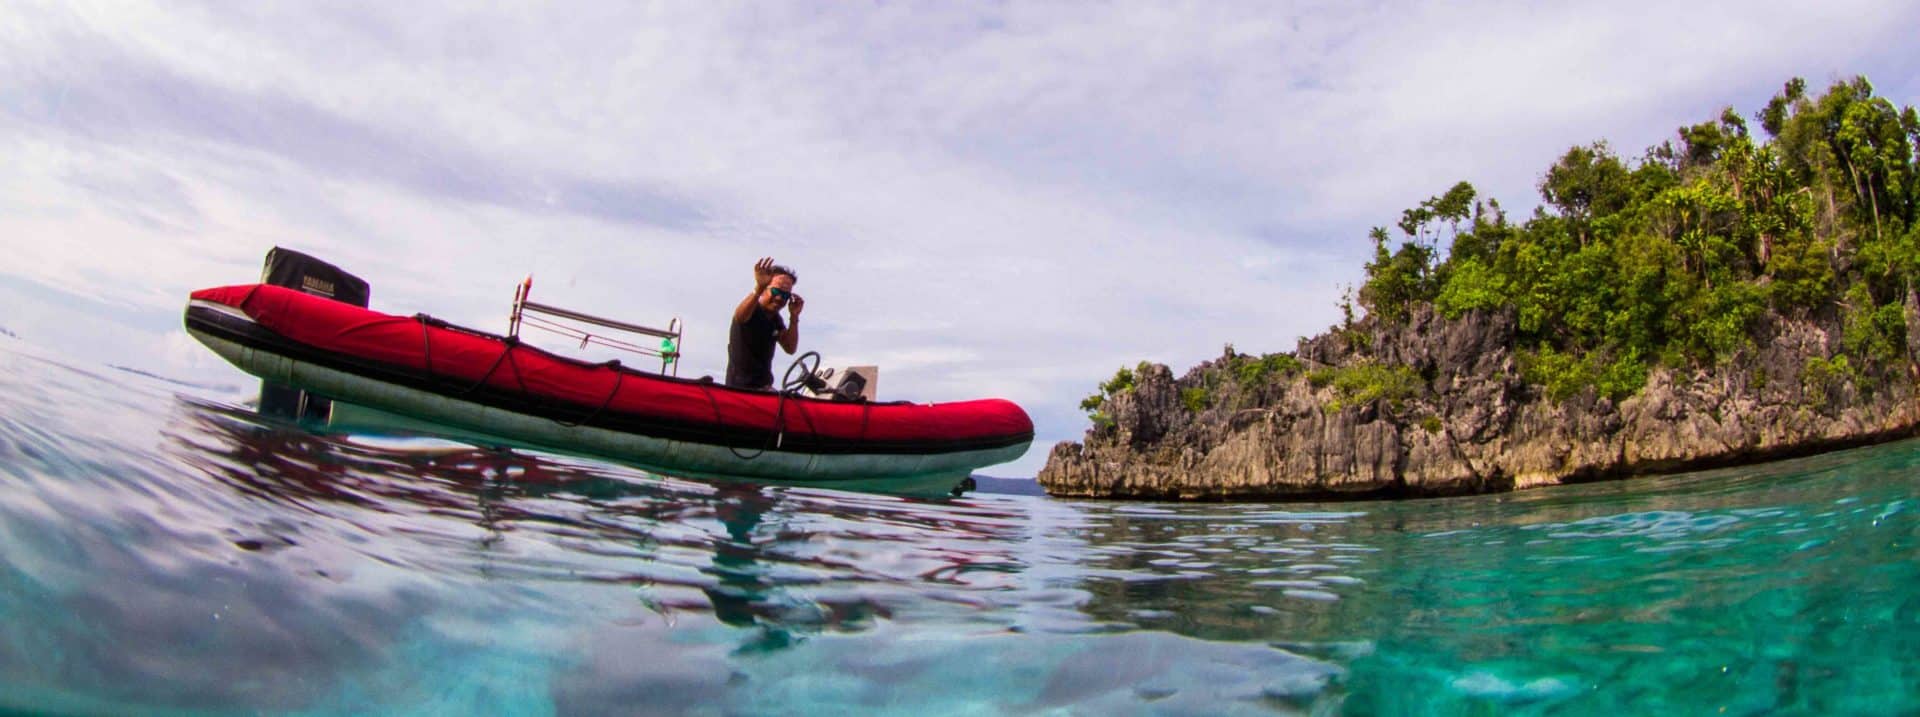 Above the Boat | Raja Ampat Adventures | Calico Jack